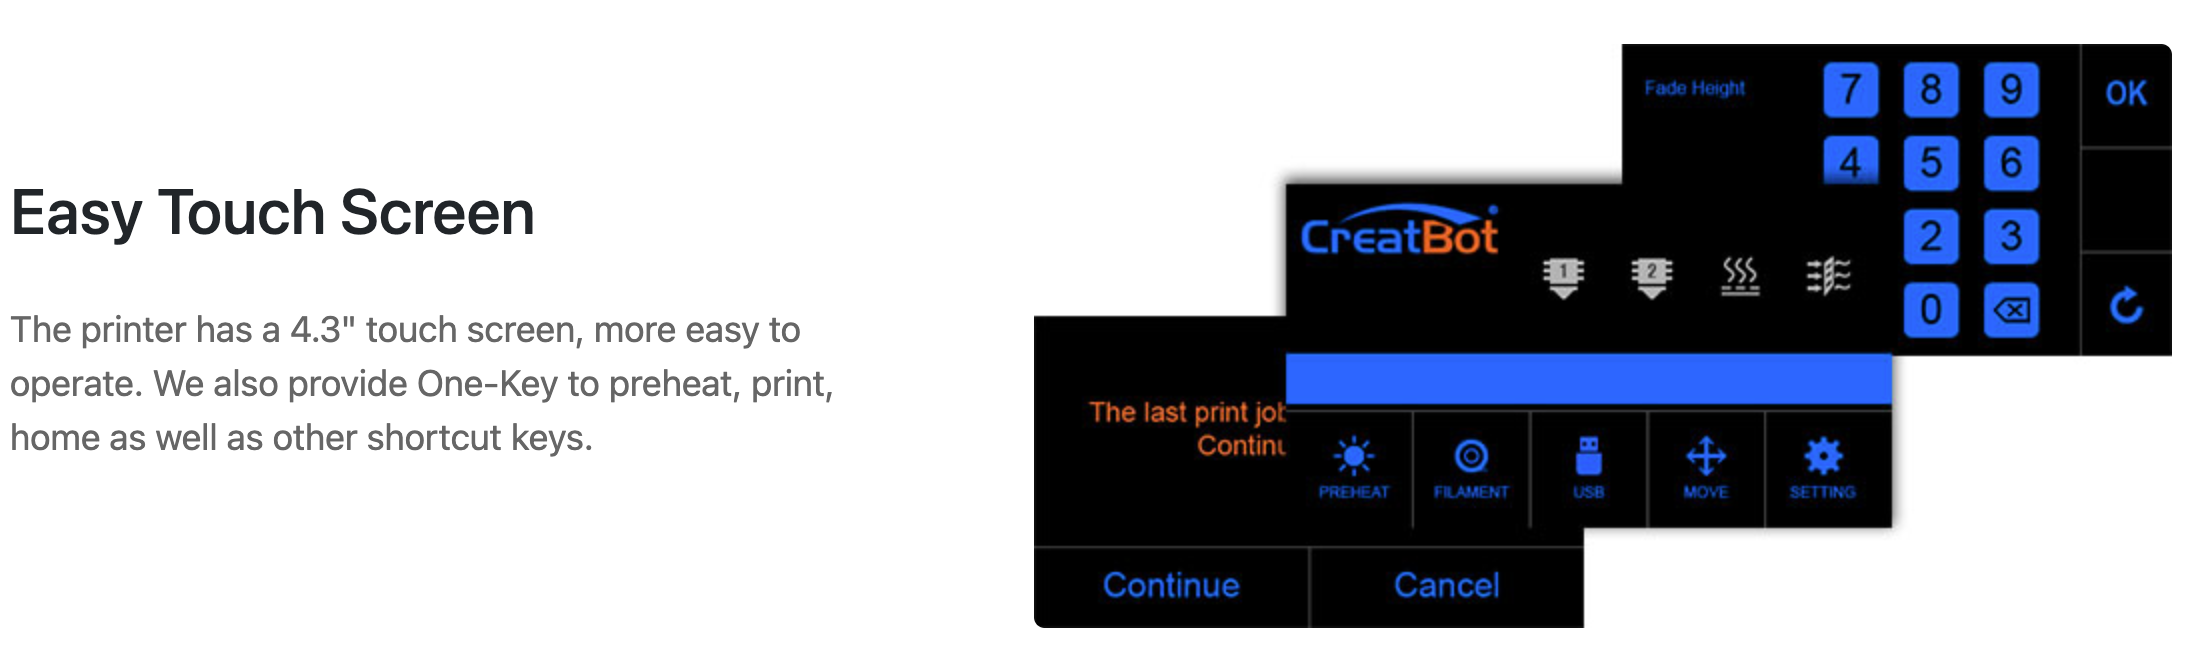 CreatBot-D600-Pro-3D-Printer-Easy-Touch-Screen